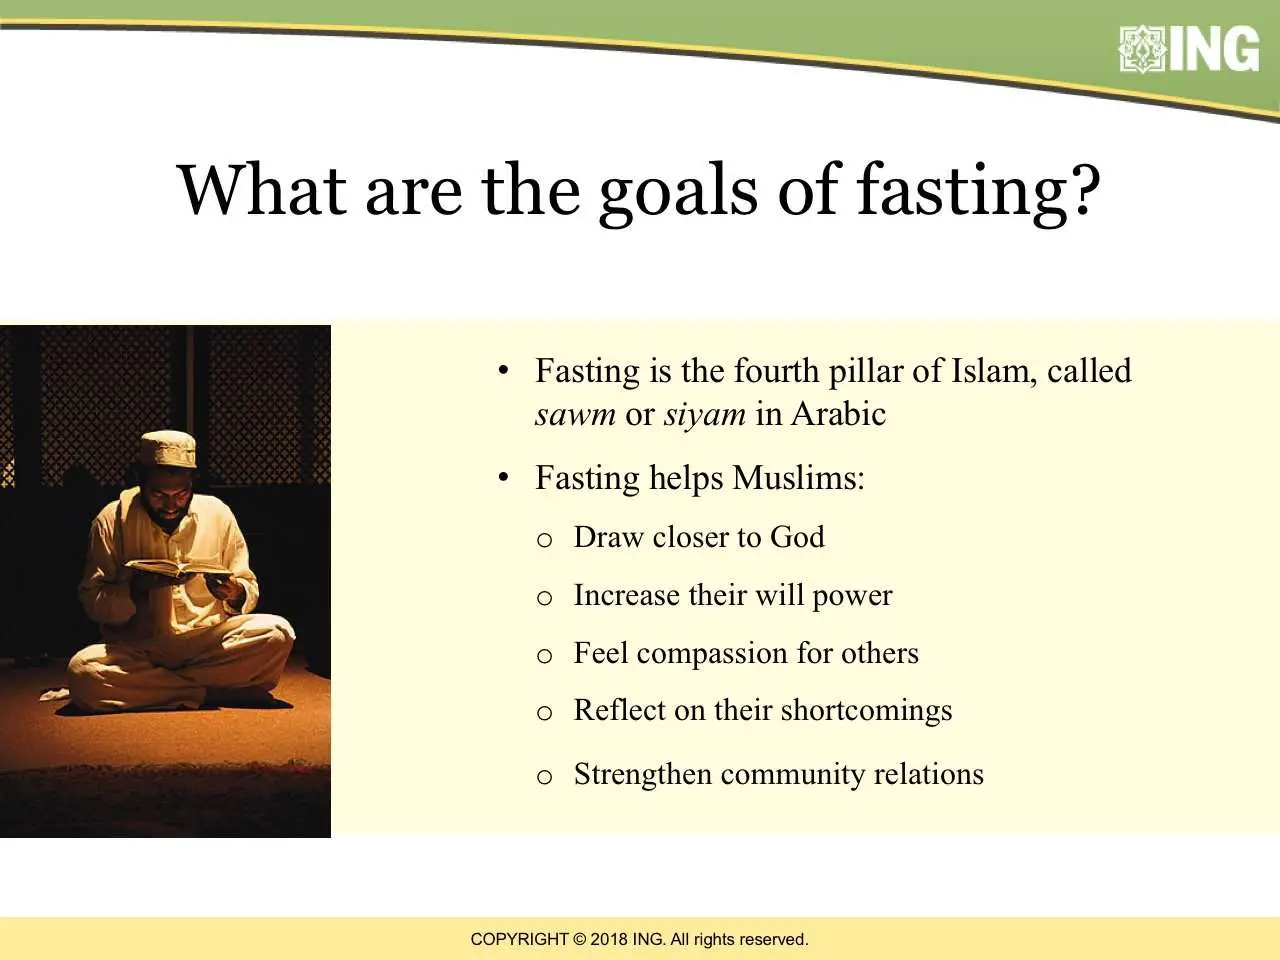 How do American Muslims observe Ramadan?